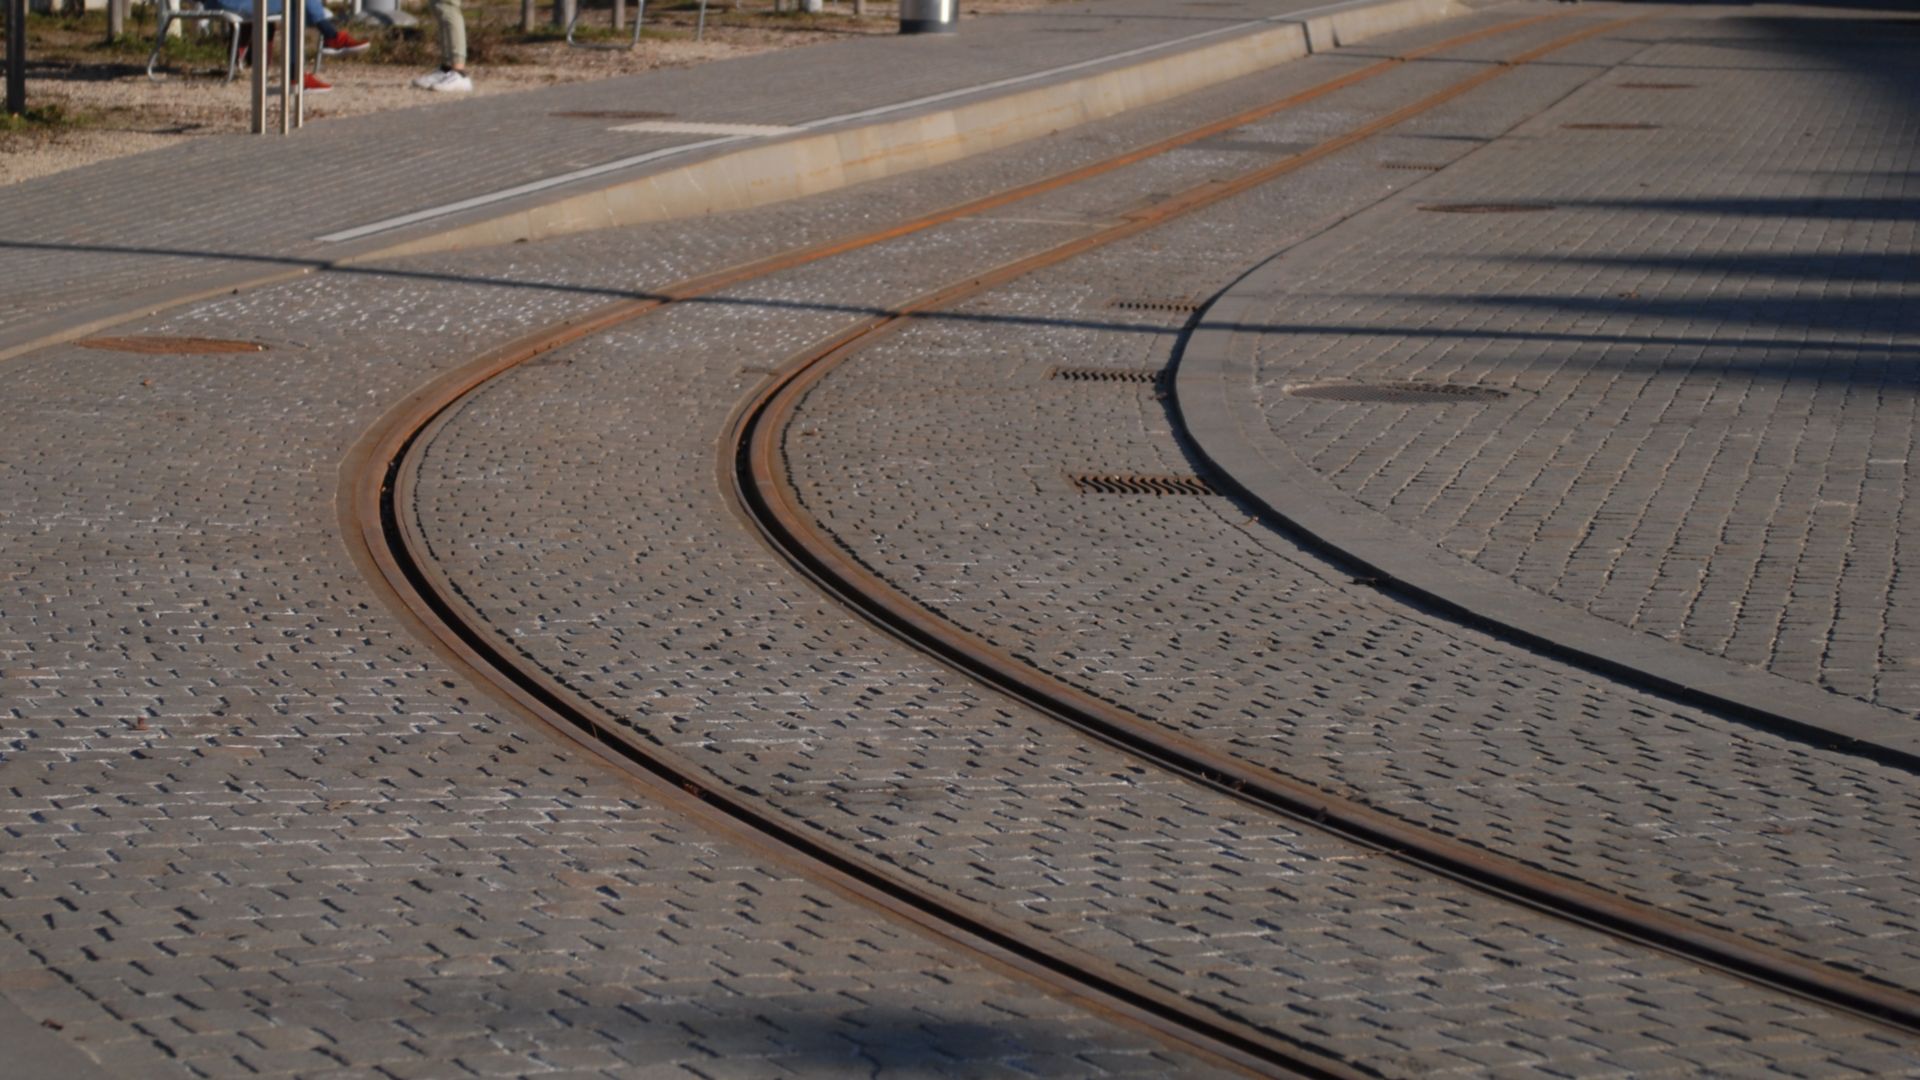 Rail fixing tram track embedded into cobblestone street in Zurich, Switzerland